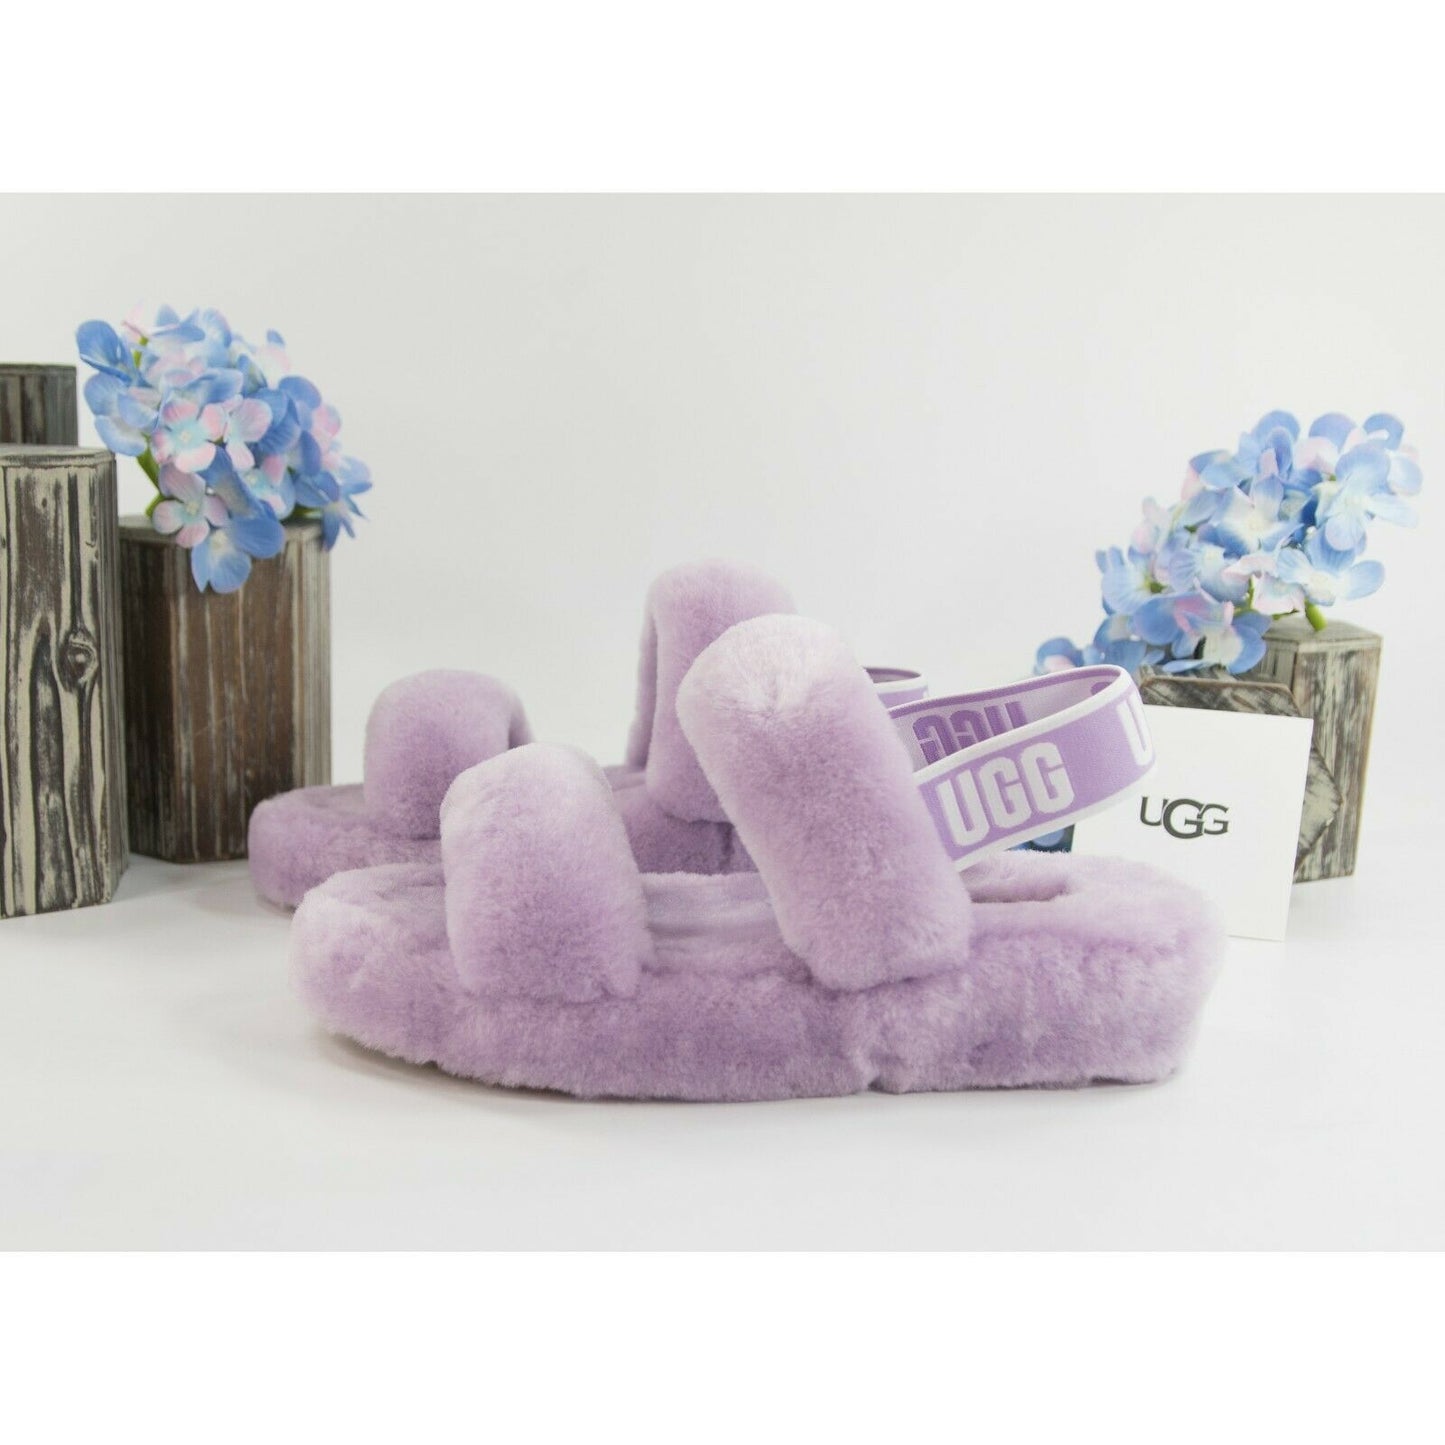 UGG Fluff Oh Yea Lilac Purple Sheepskin Fur Slippers Slides Sandals Sz 7 NIB